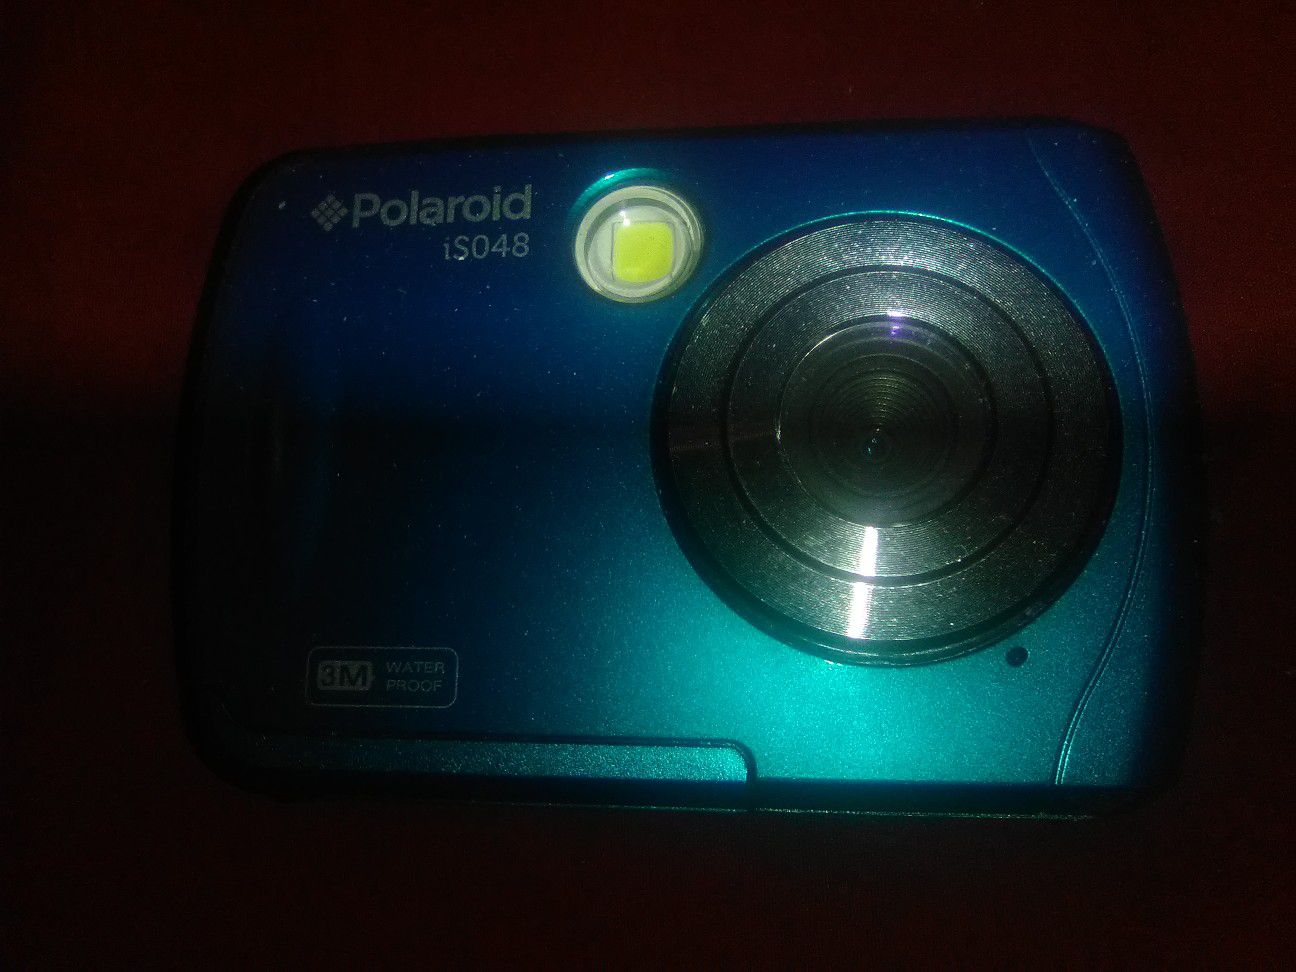 Polaroid iSO48